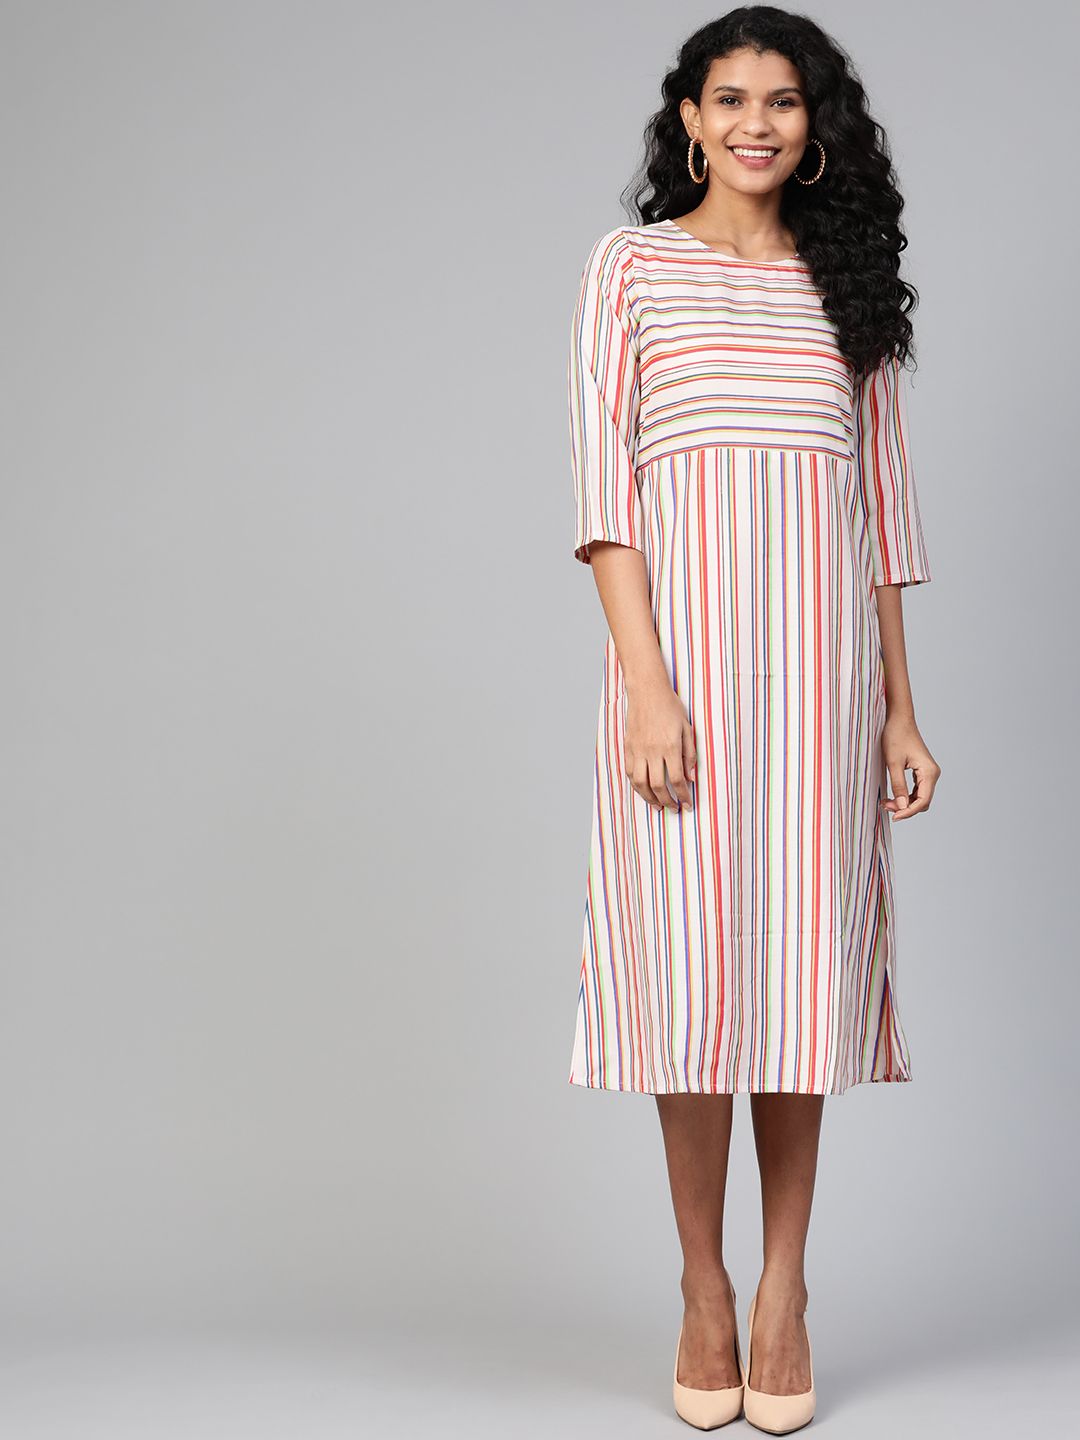 Indo Era Women Cream-Coloured & Red Striped A-Line Dress Price in India